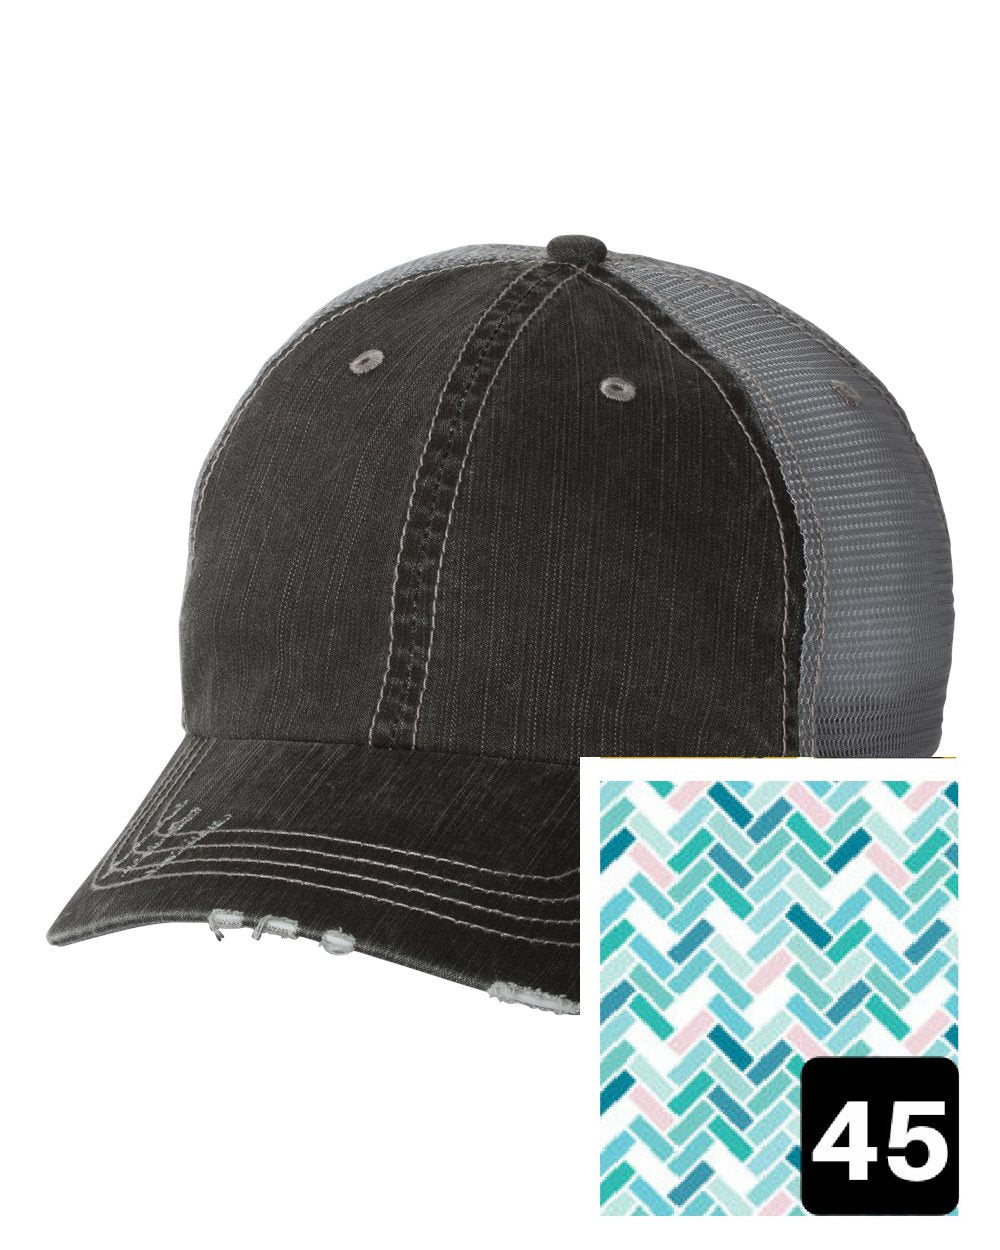 North Dakota Hat - Distressed Ponytail or Messy Bun Hat  - Many Fabric Choices